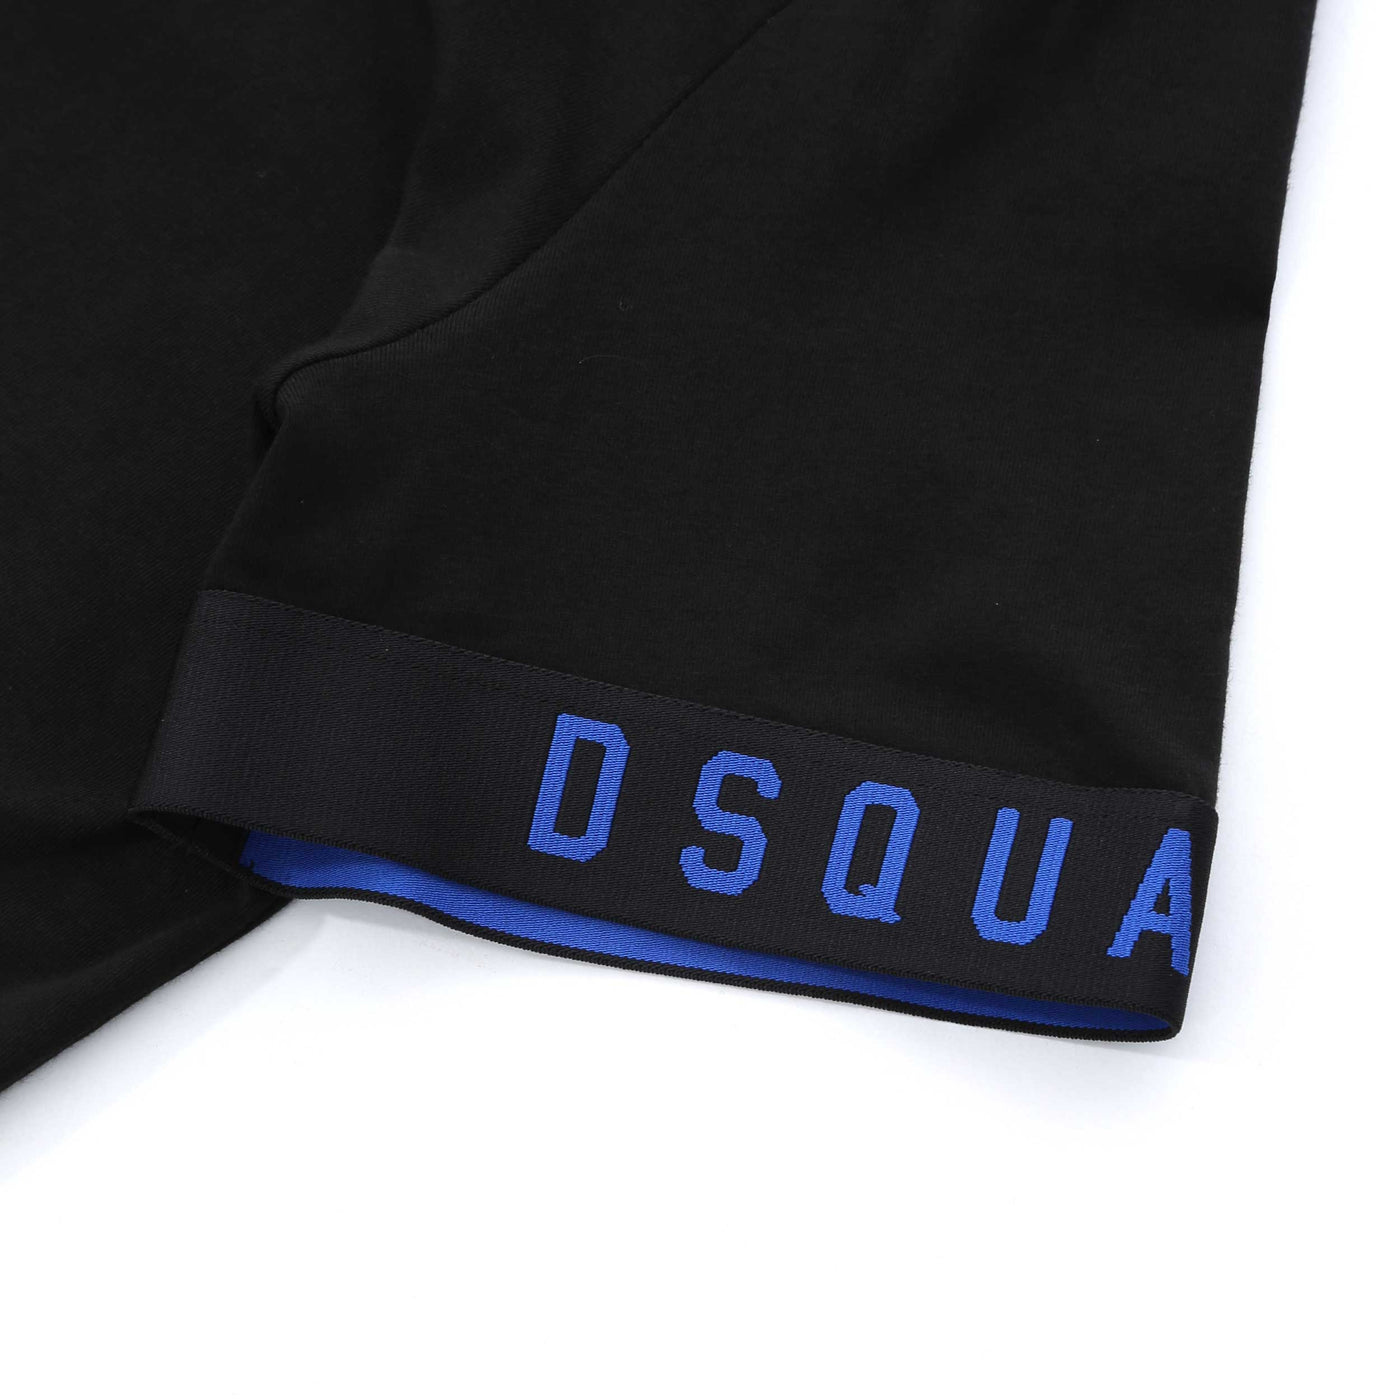 Dsquared2 Arm Band Logo T Shirt in Black Blue Cuff